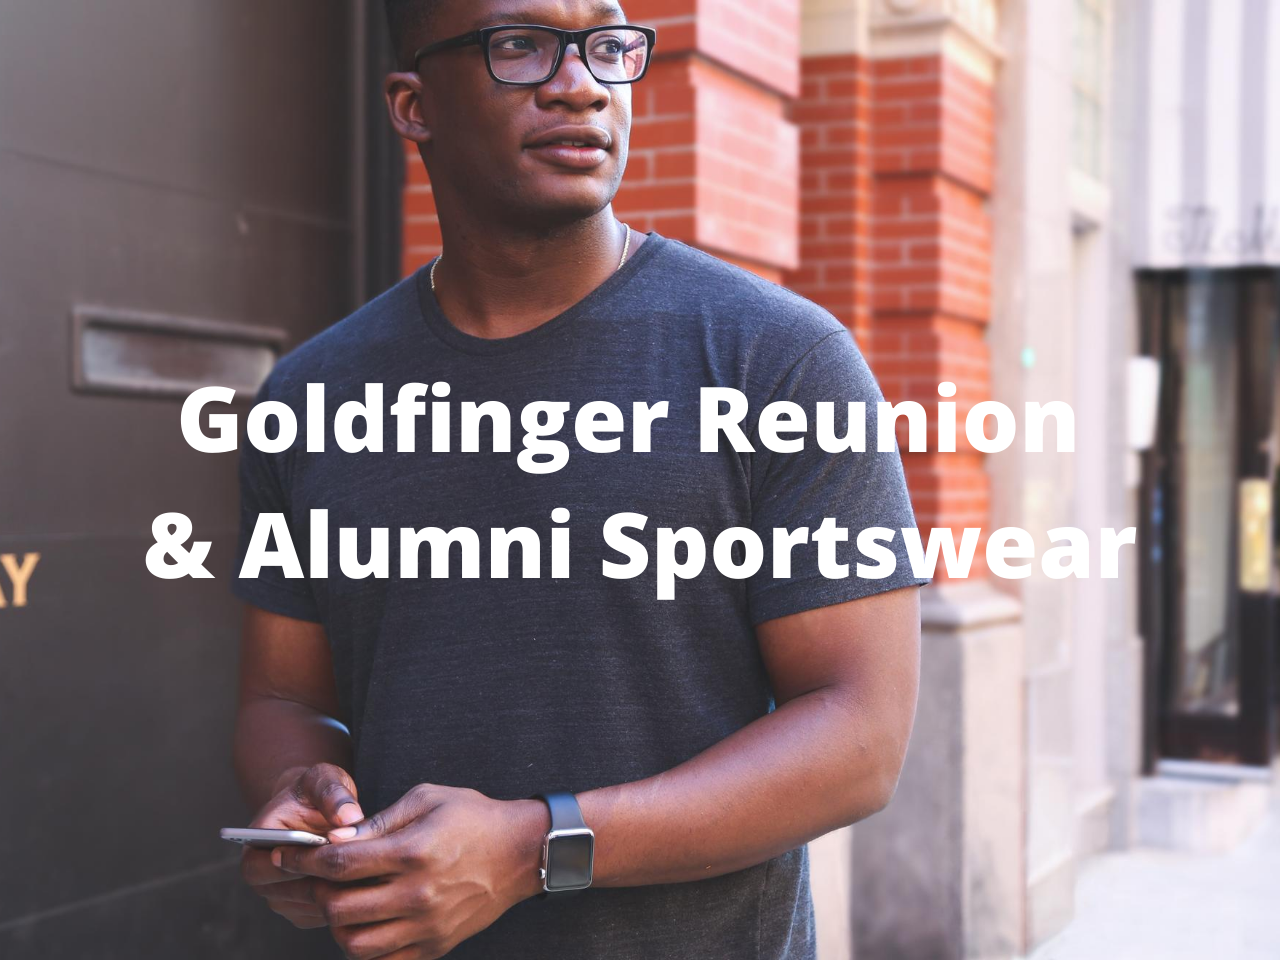 Goldfinger Reunion & Alumni Sportswear